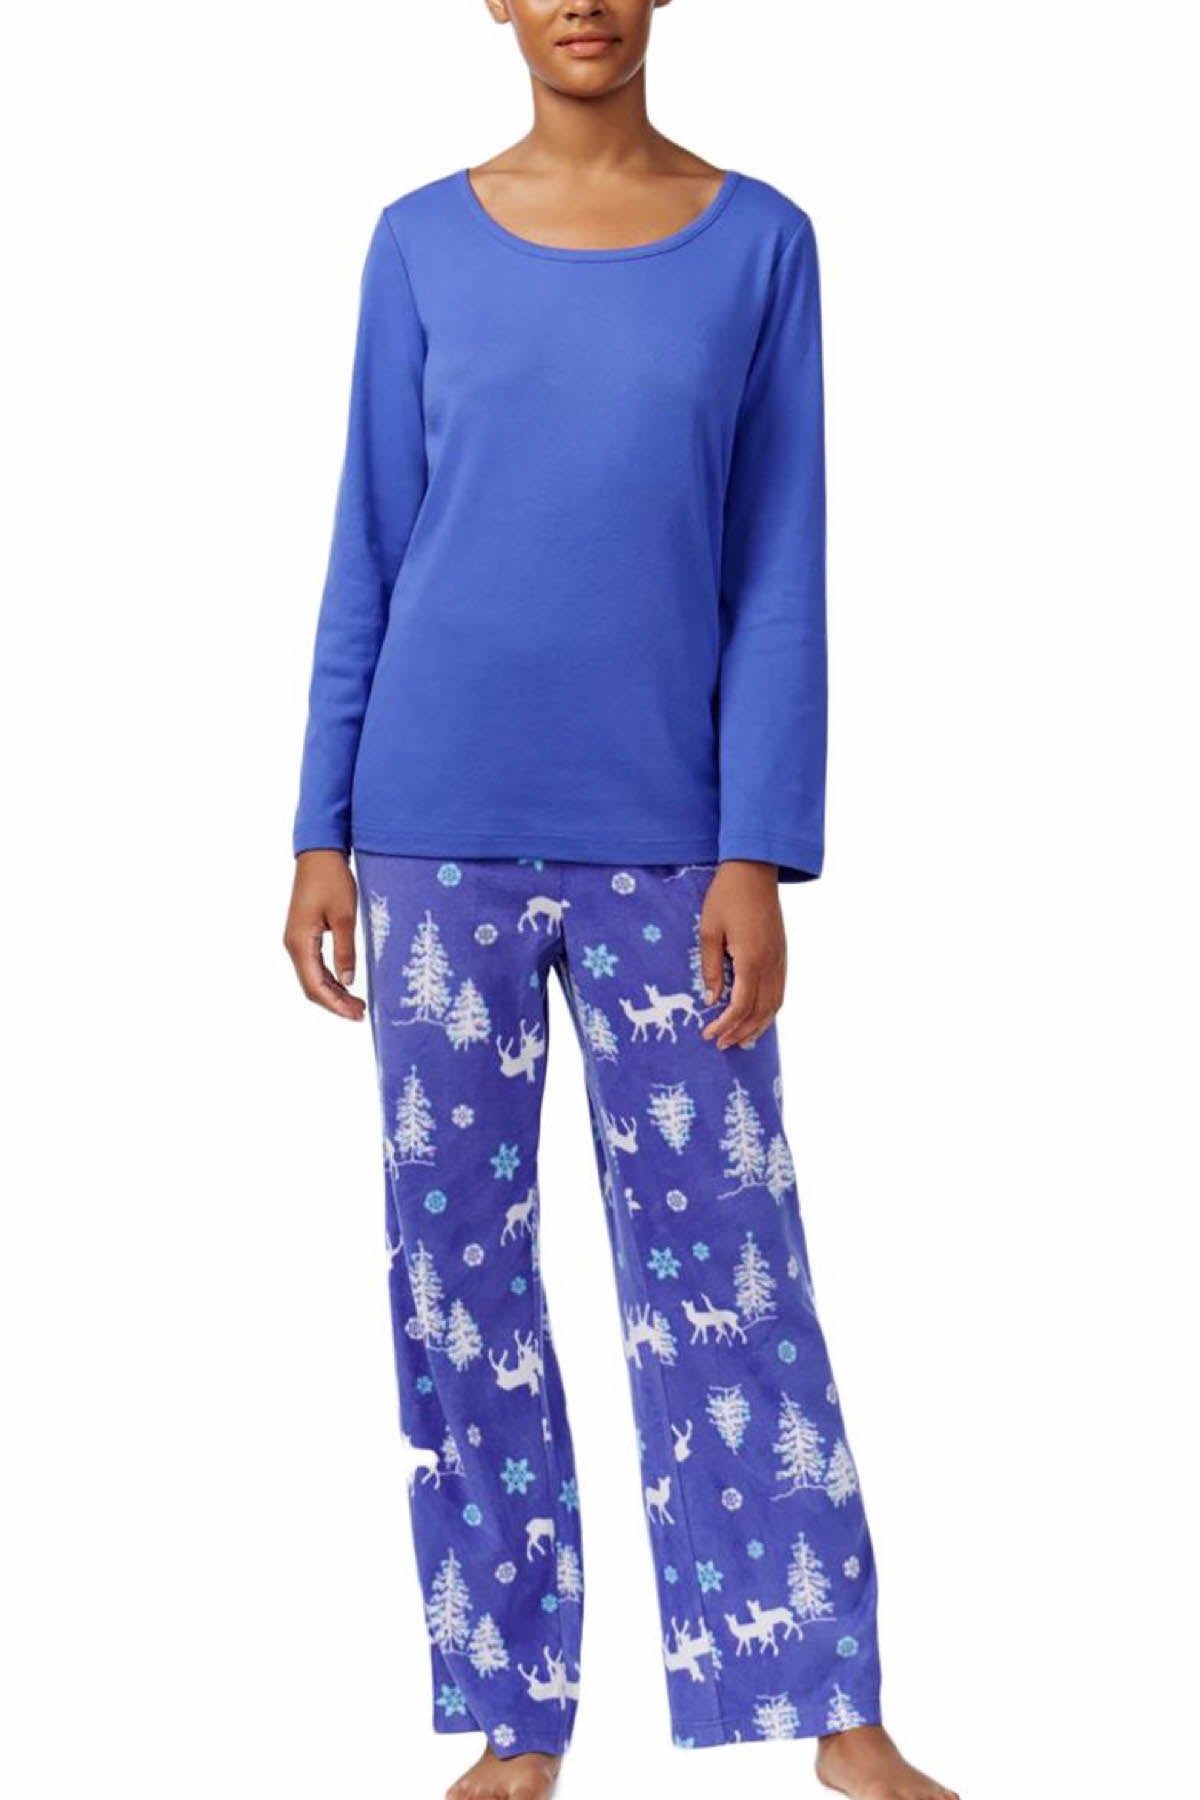 Charter Club Intimates Blue Forest Friends 2-Piece Long Sleeve Tee & Fleece Pajama Pant Set